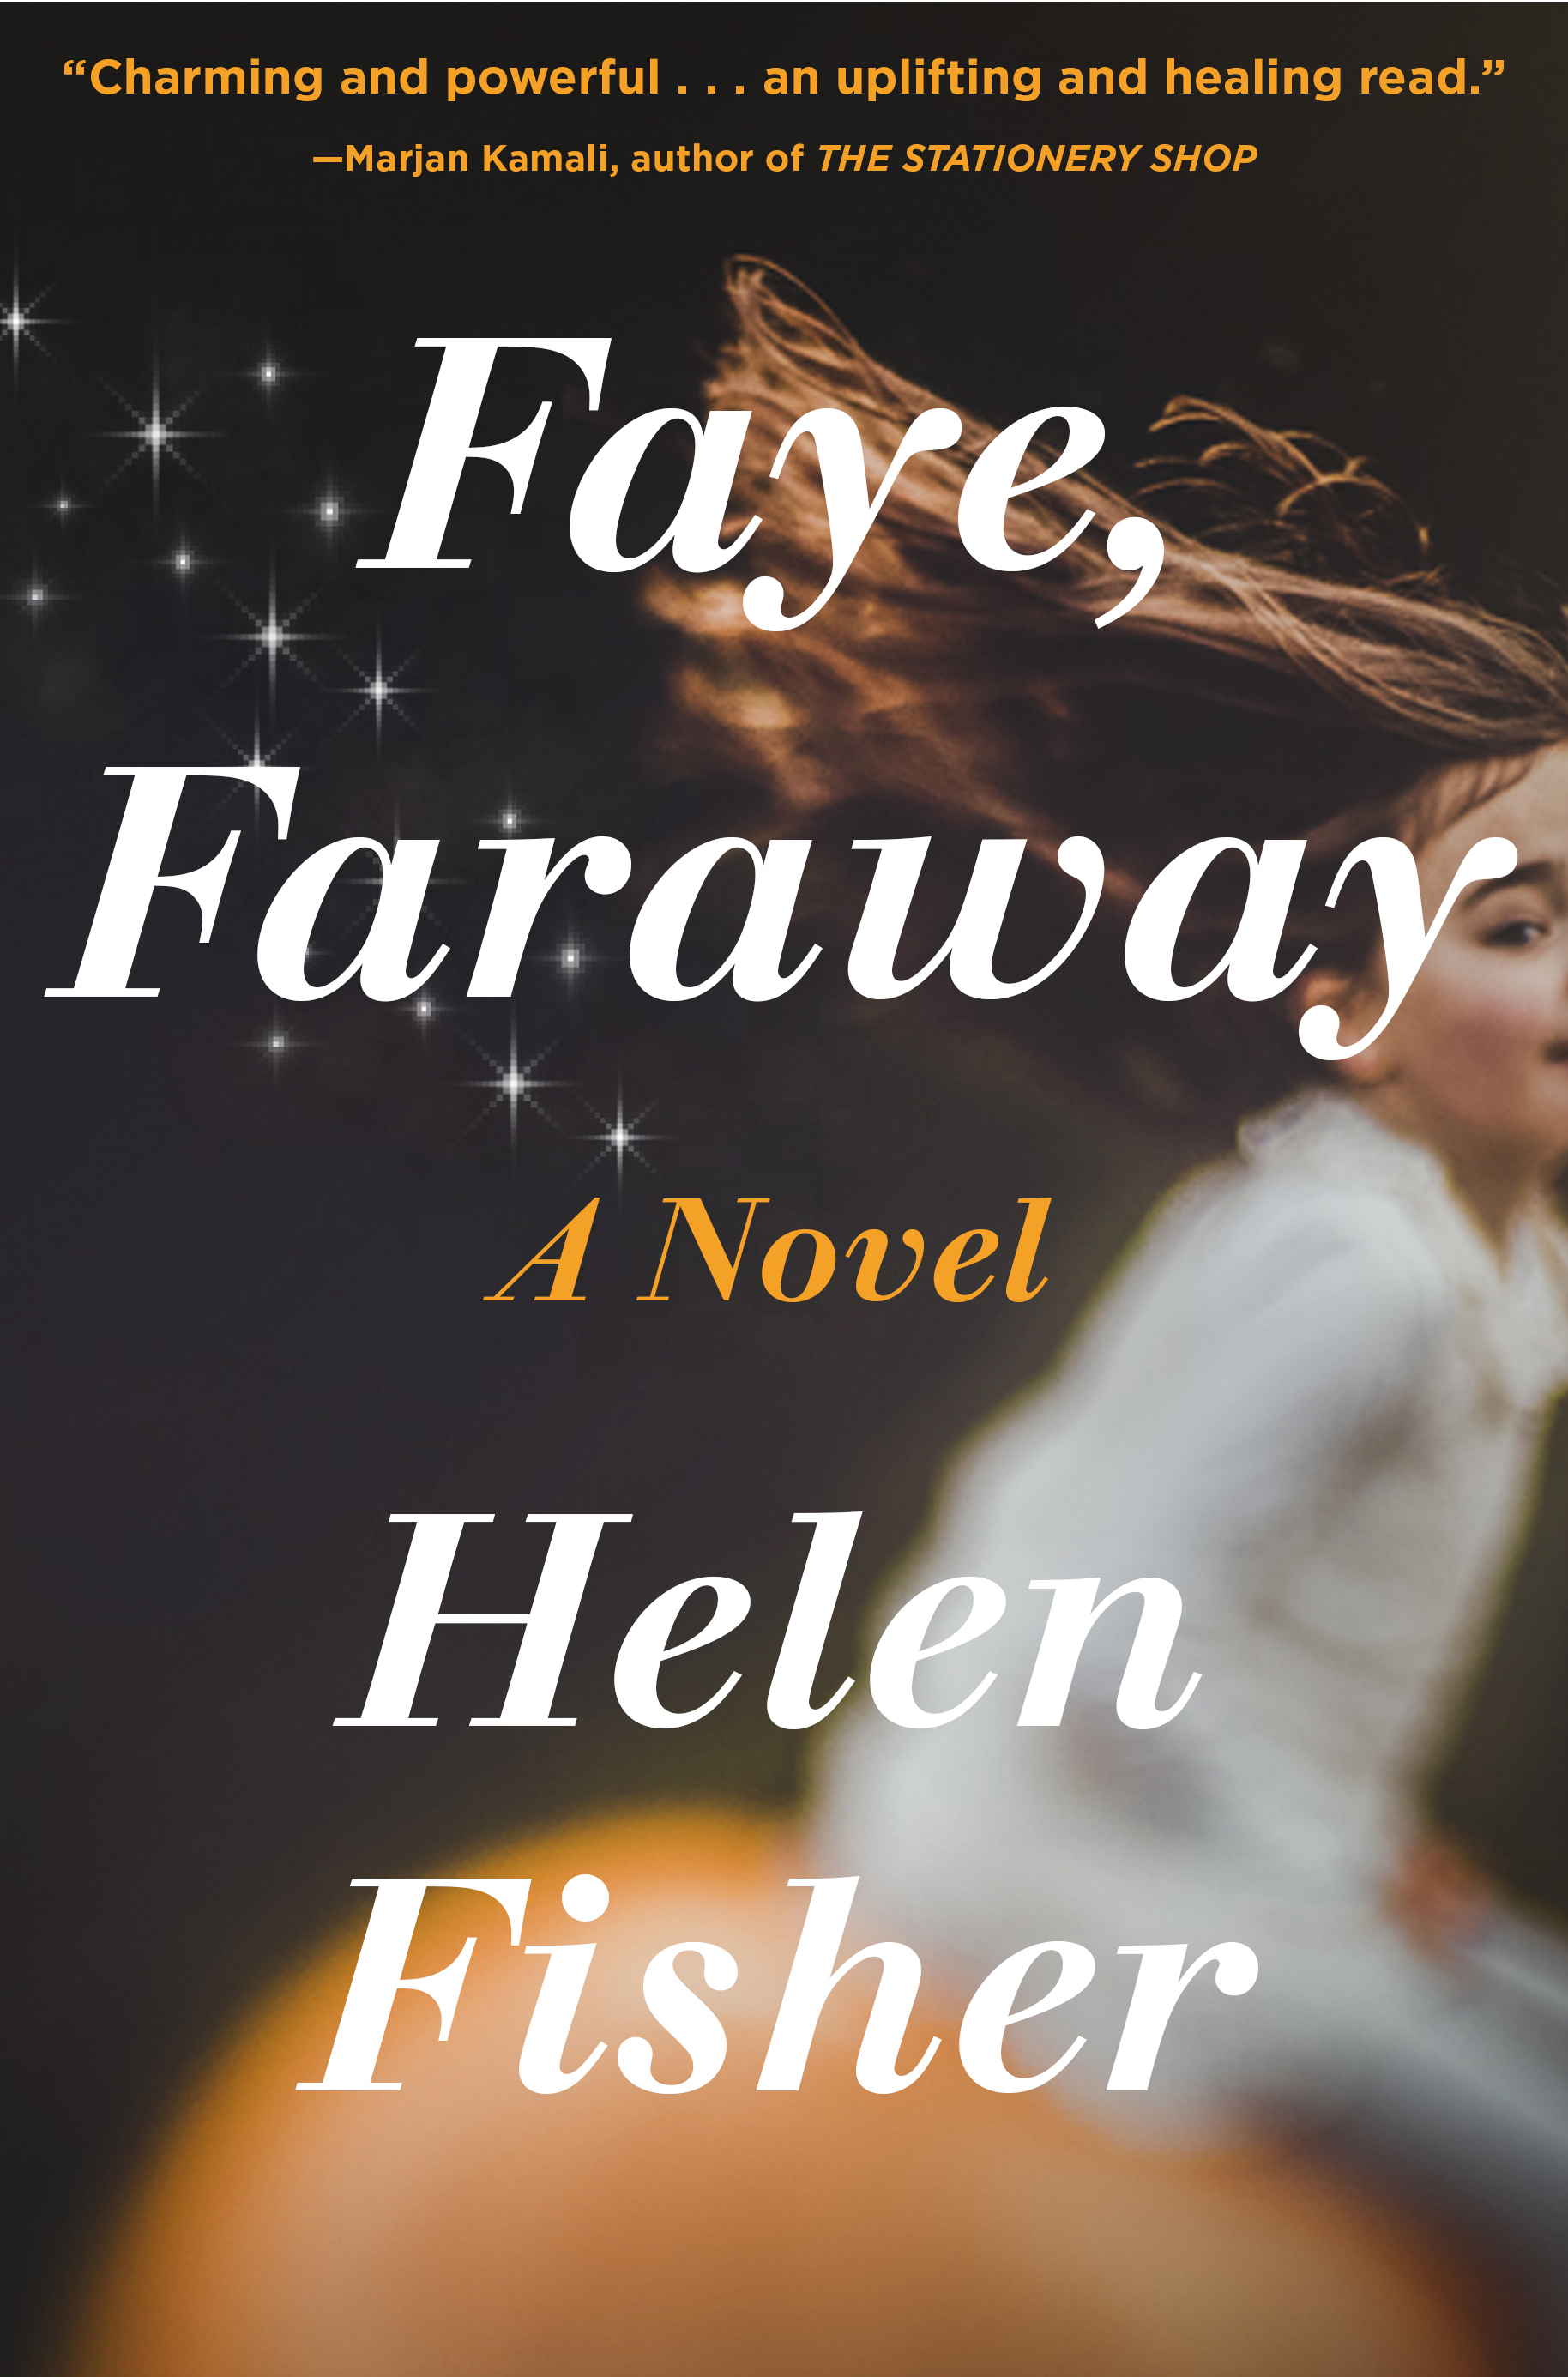 Faye, Faraway by Helen Fisher Free ePub Download